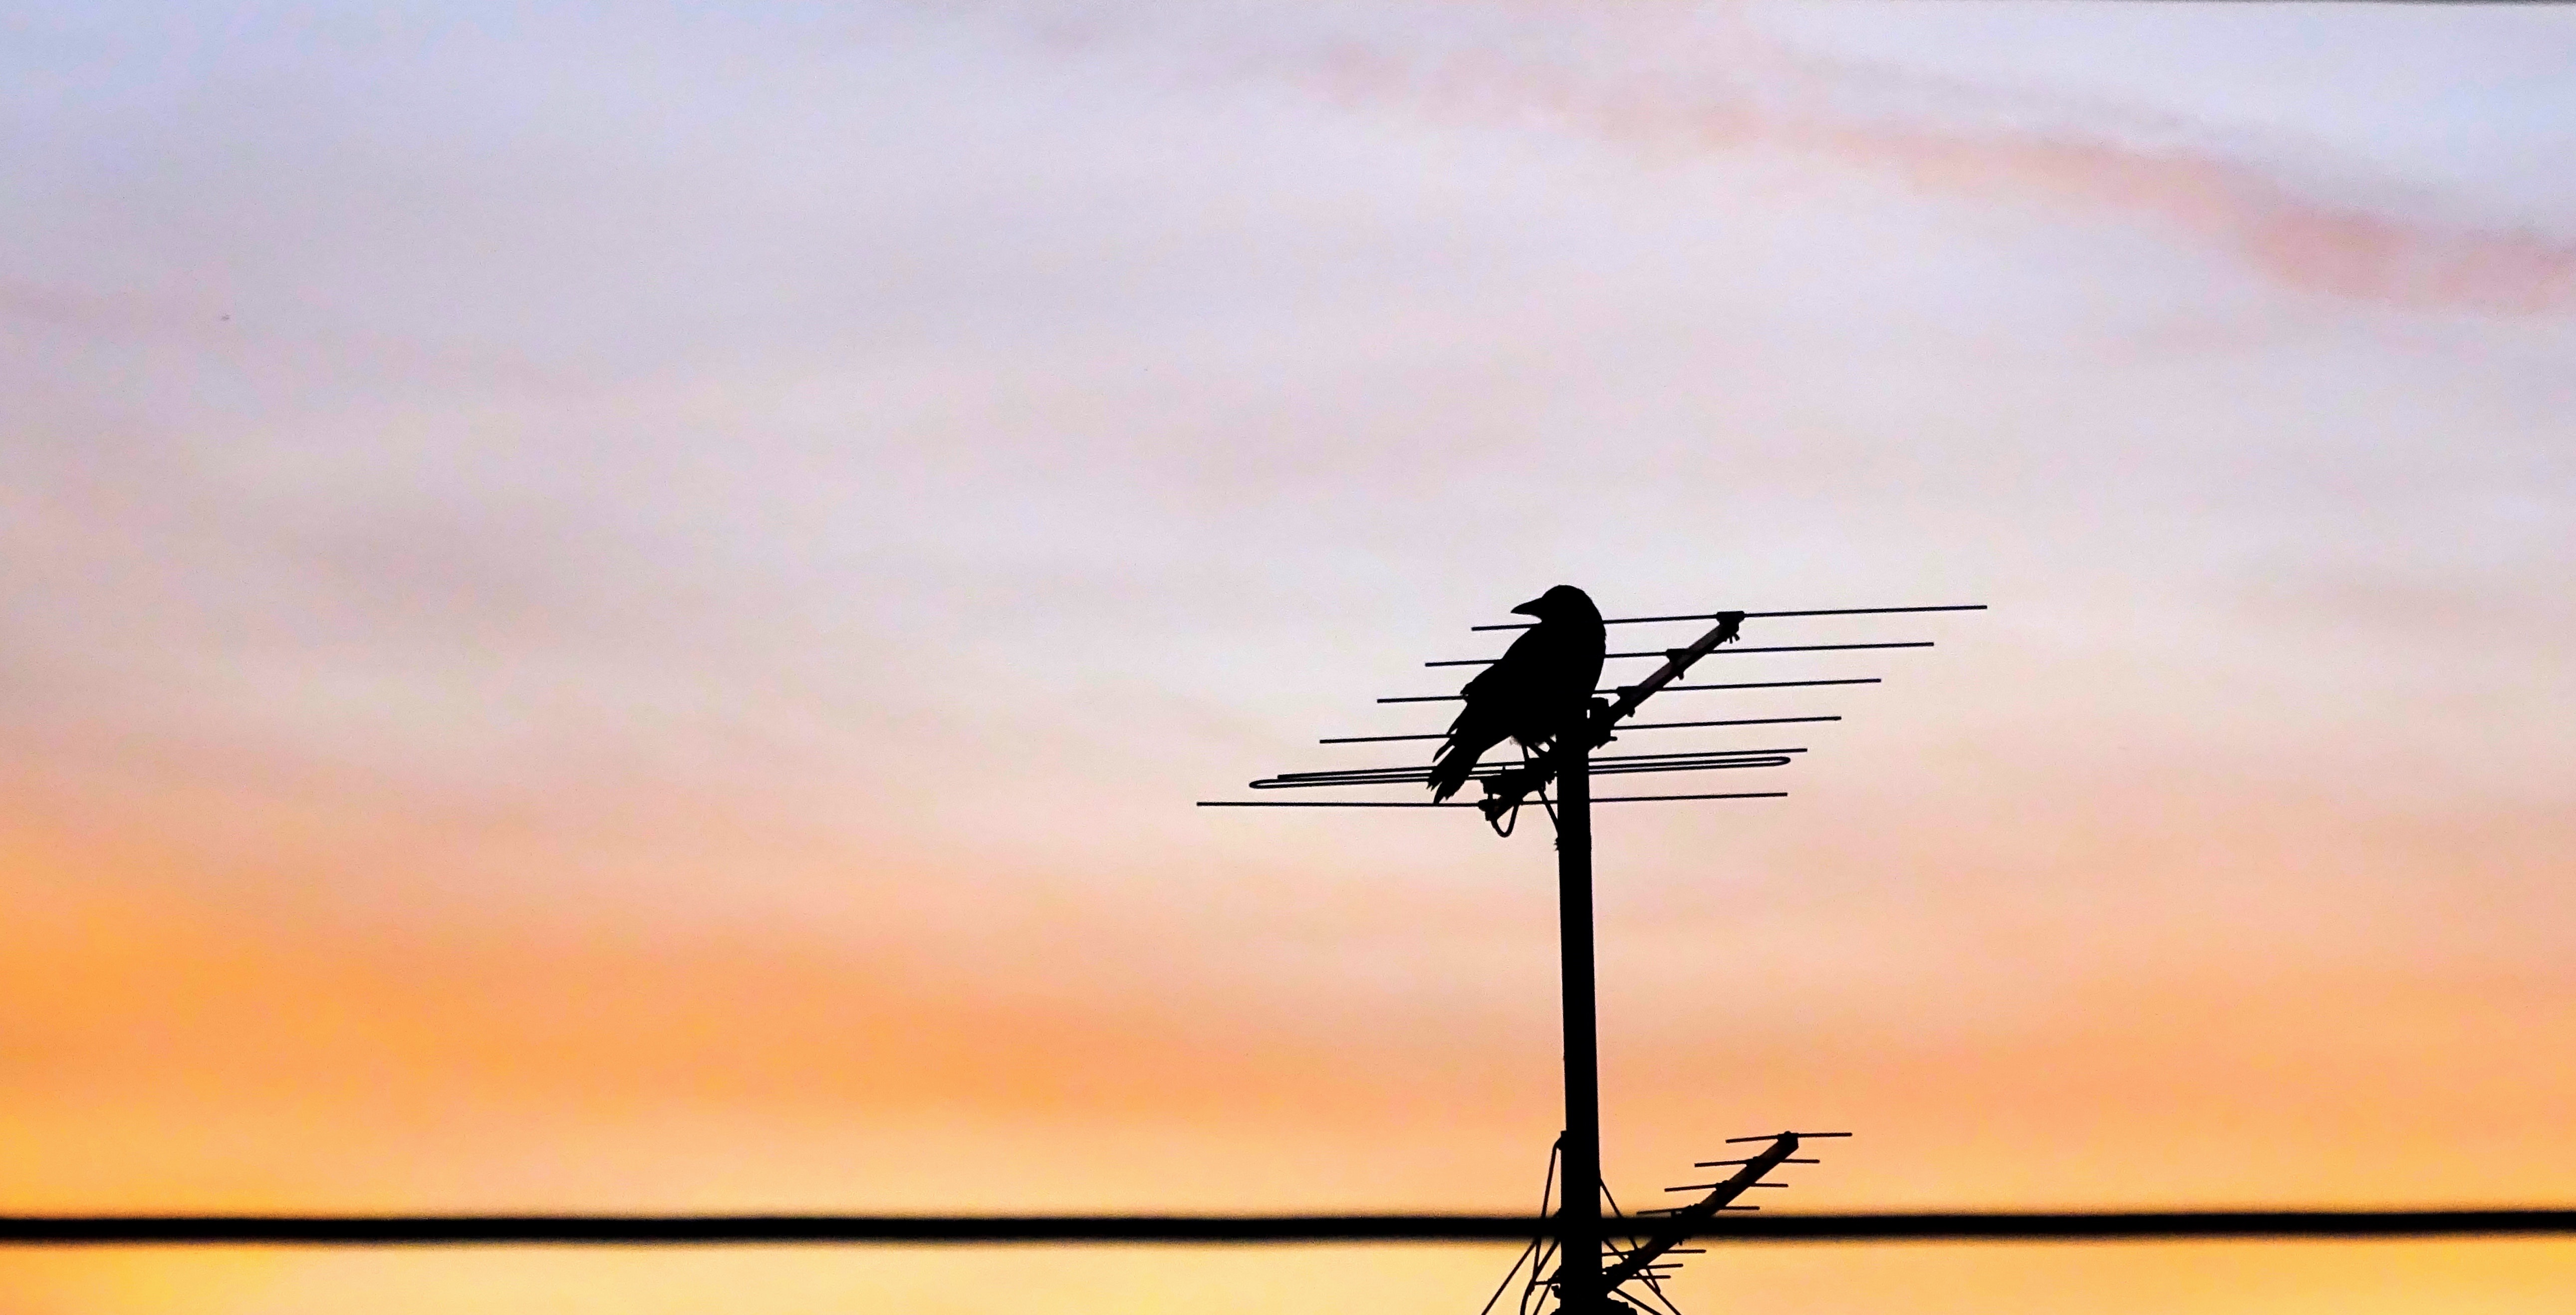 Crow on antenna during sunset photo